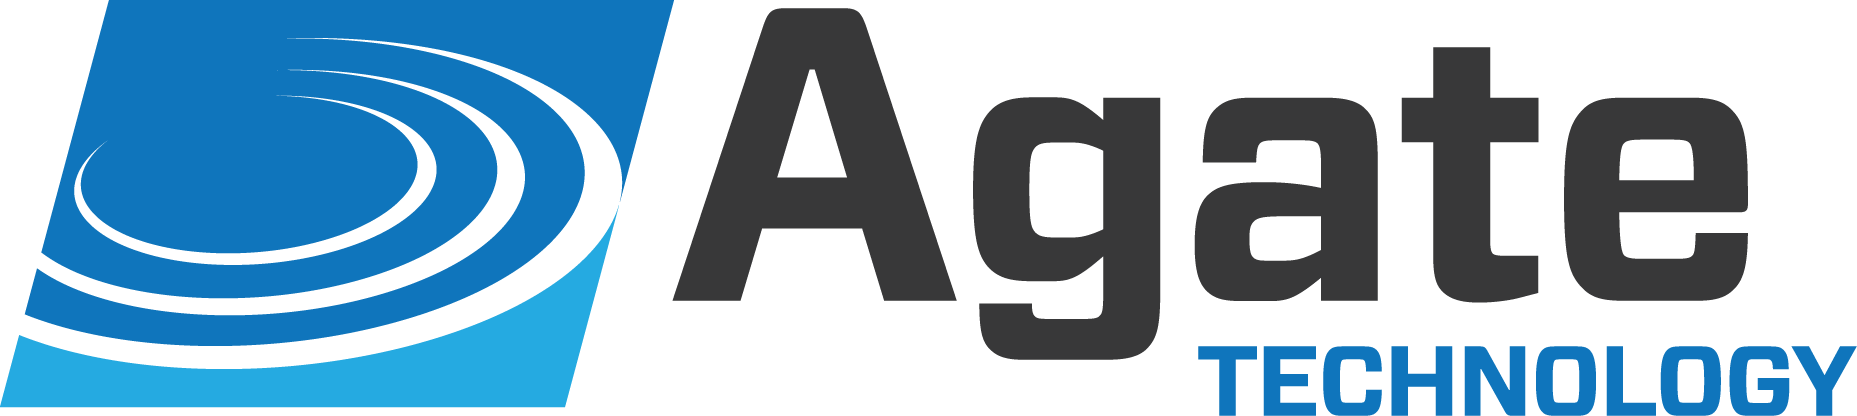 Agate Technology logo